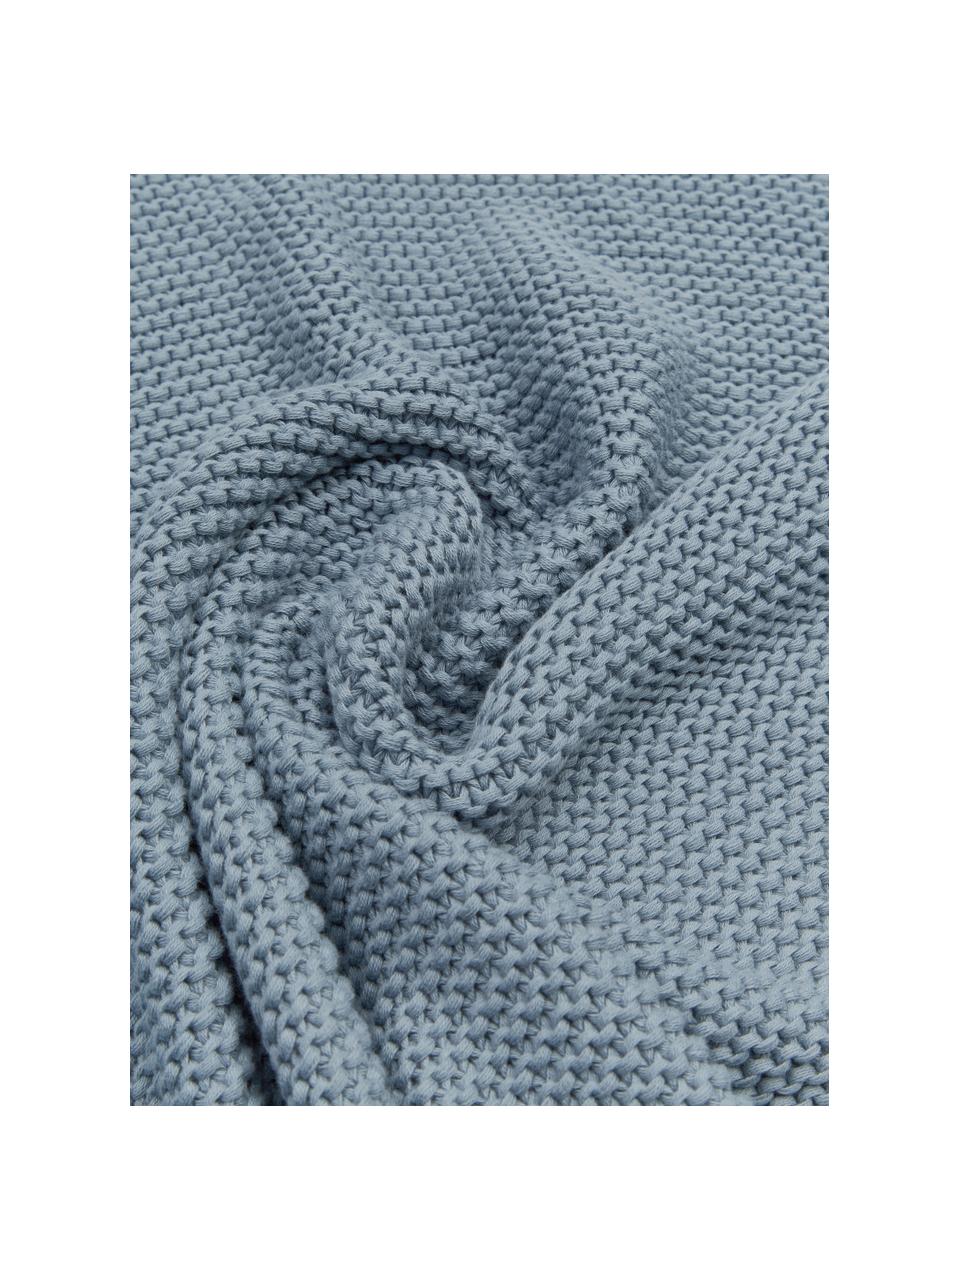 Strick-Kissenhülle Adalyn aus Bio-Baumwolle in Blau, 100% Bio-Baumwolle, GOTS-zertifiziert, Blau, B 40 x L 40 cm